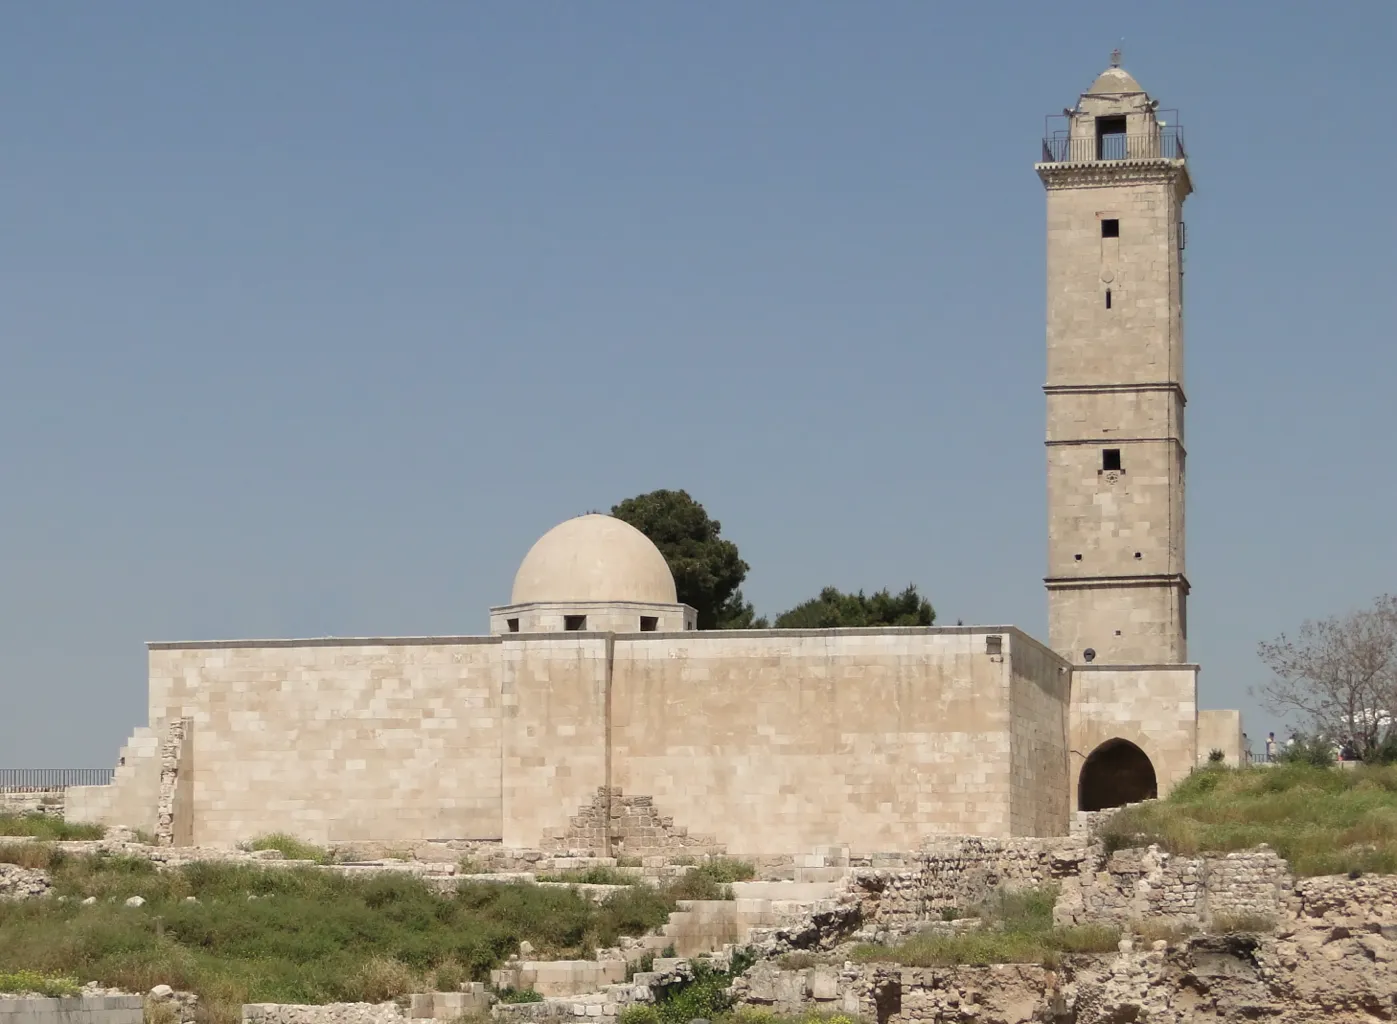 The Citadel of Aleppo 3